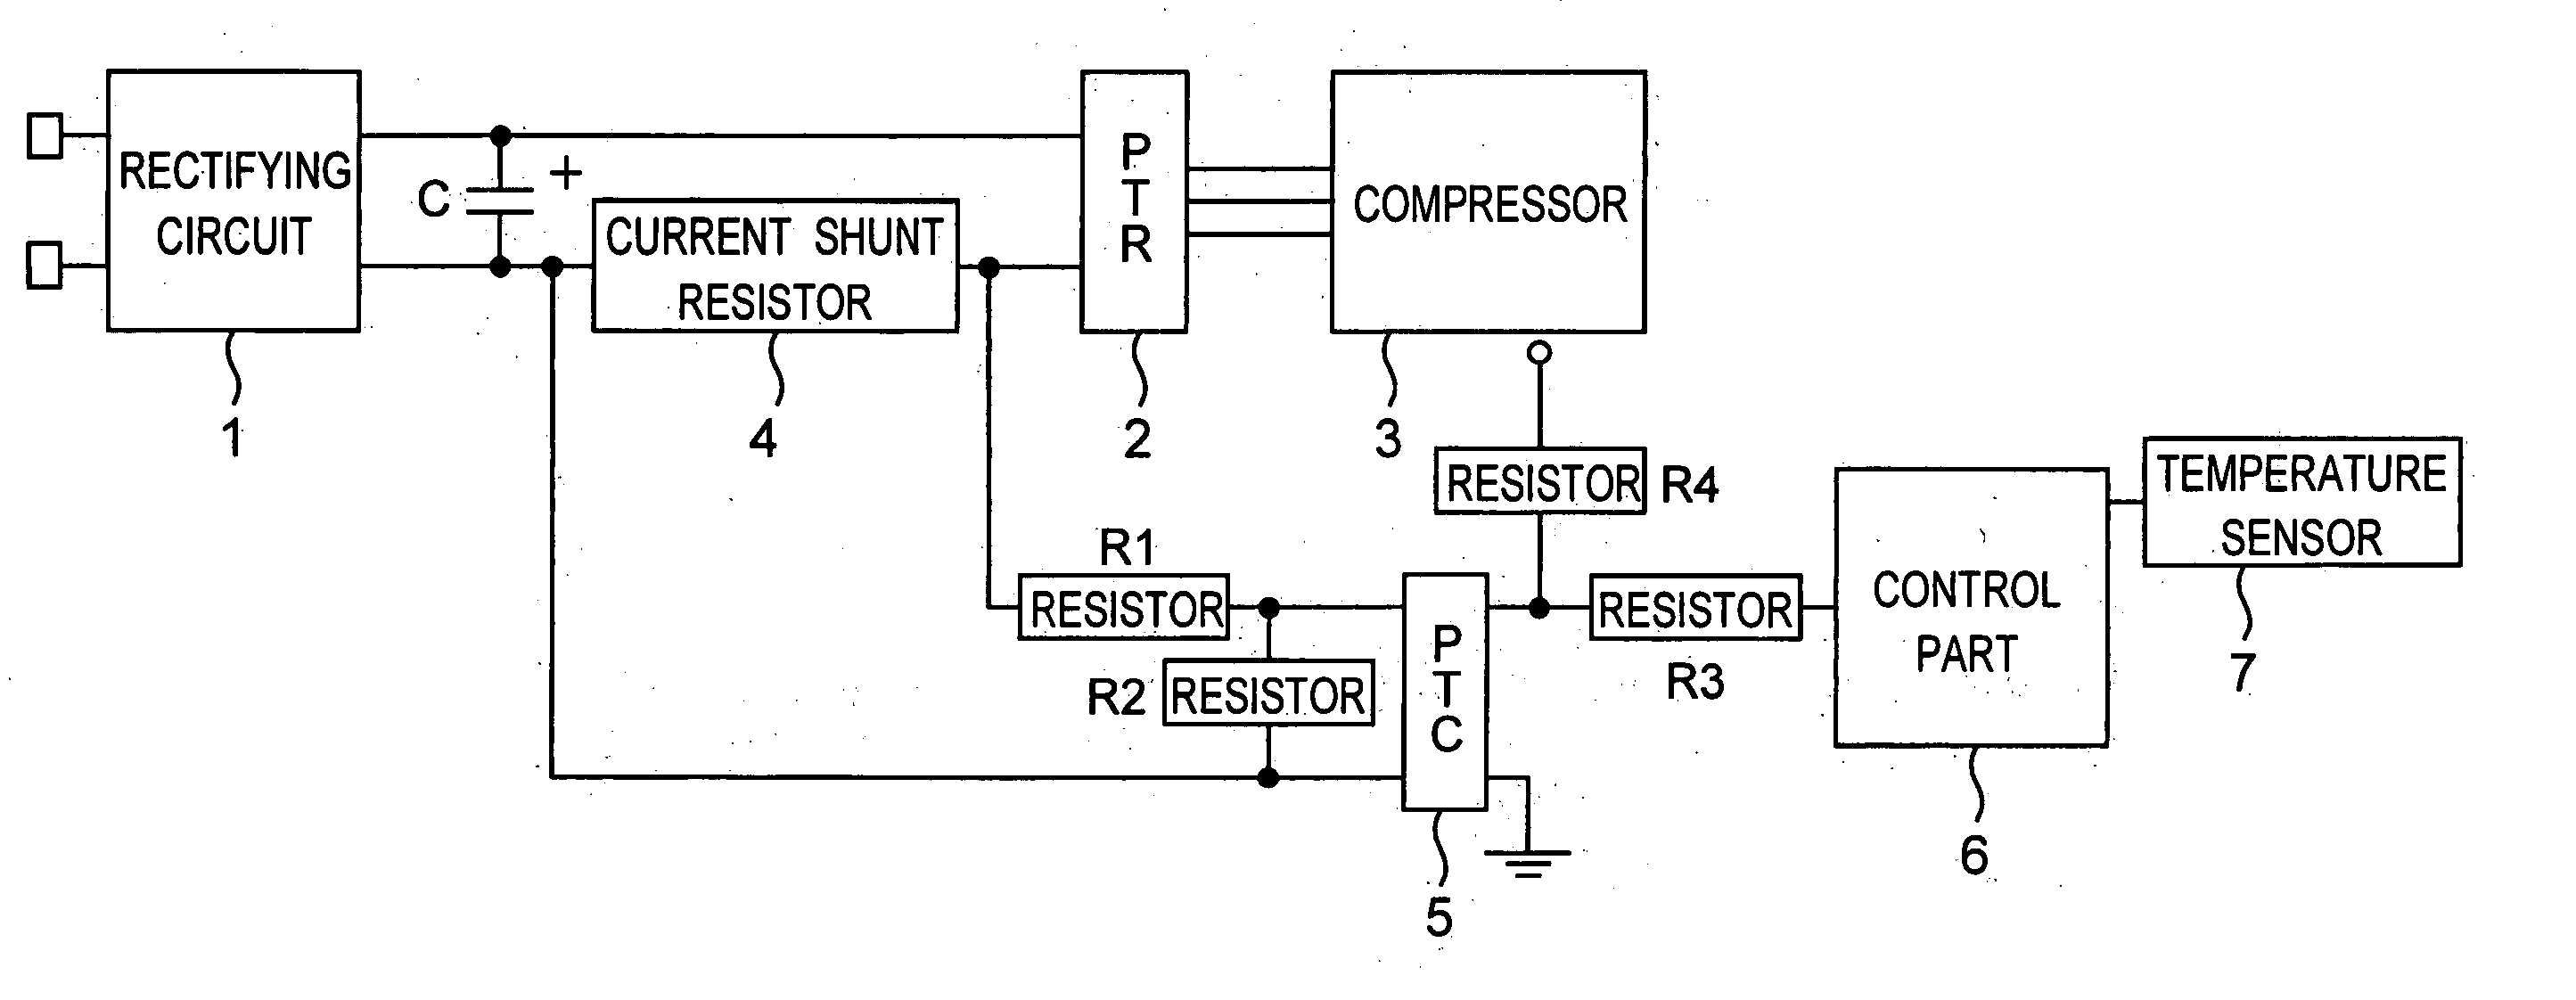 Compressor unit and refrigerator using the unit